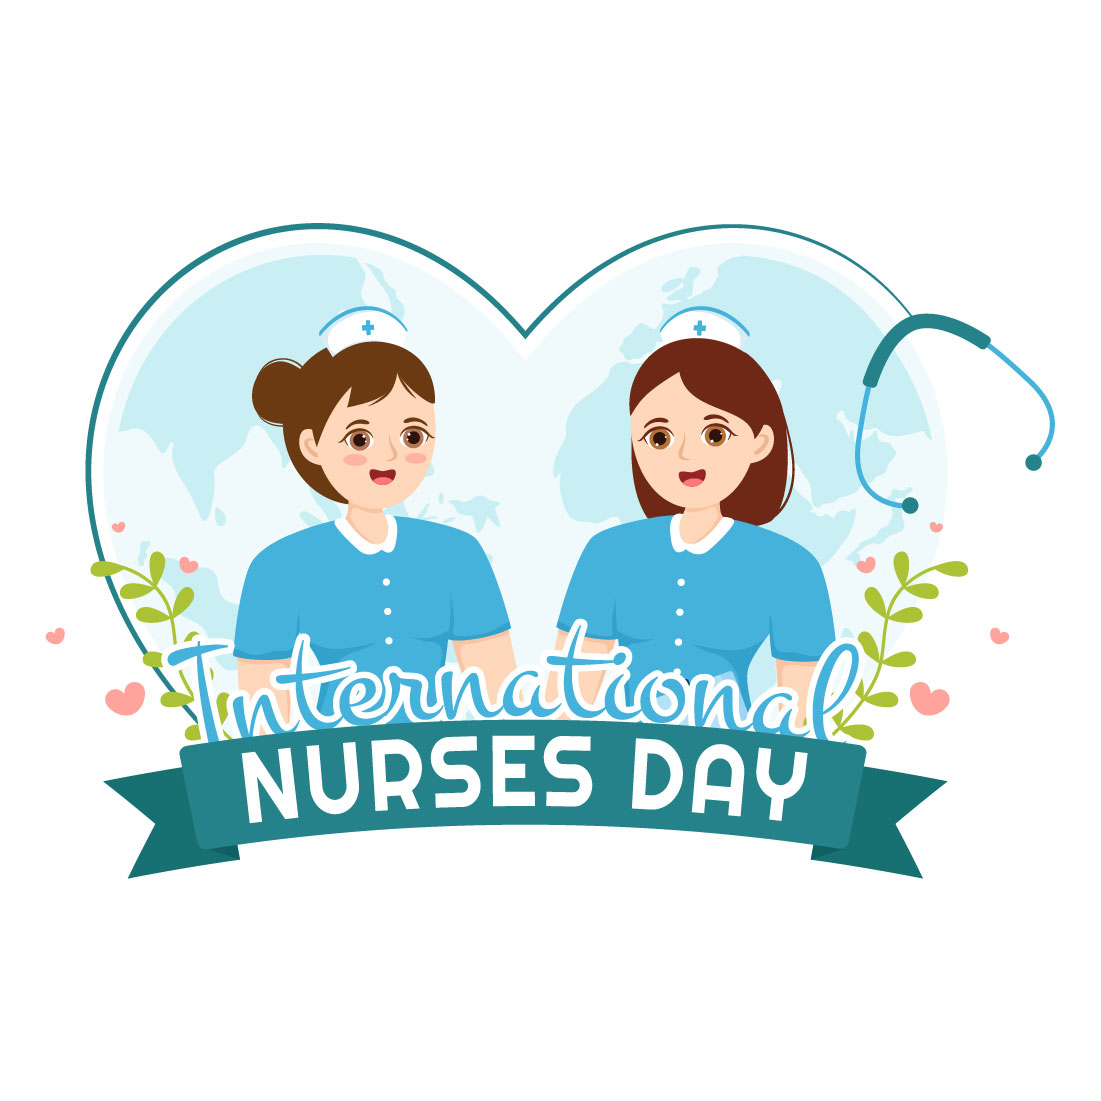 14 International Nurses Day Illustration preview image.